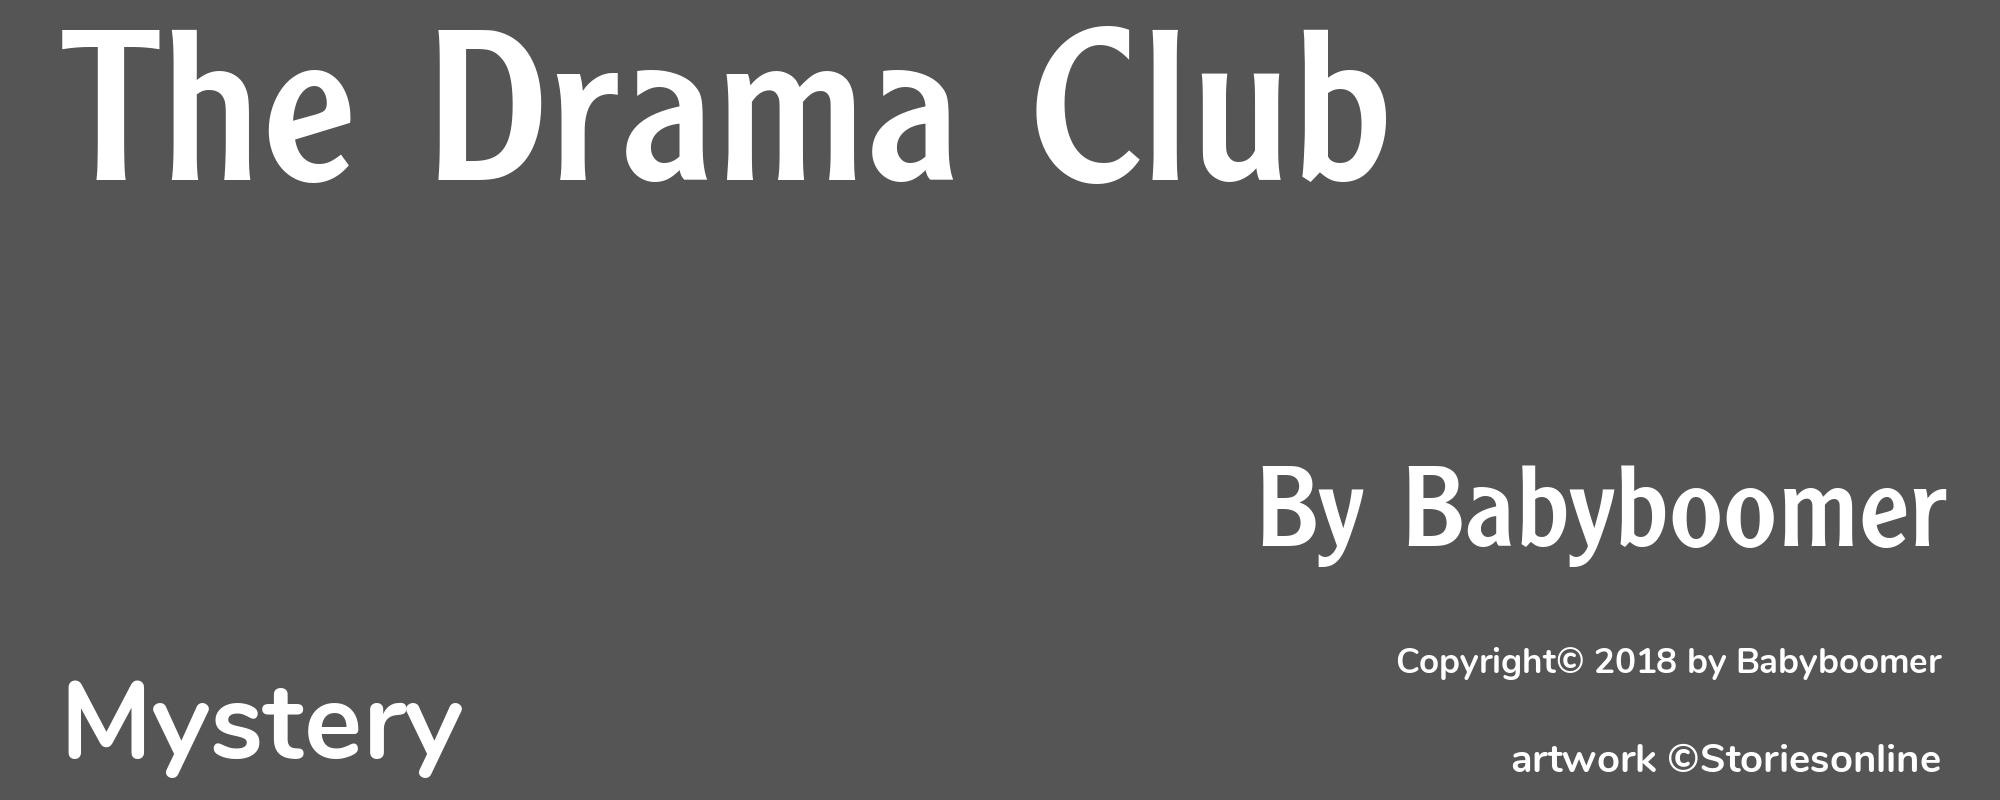 The Drama Club - Cover